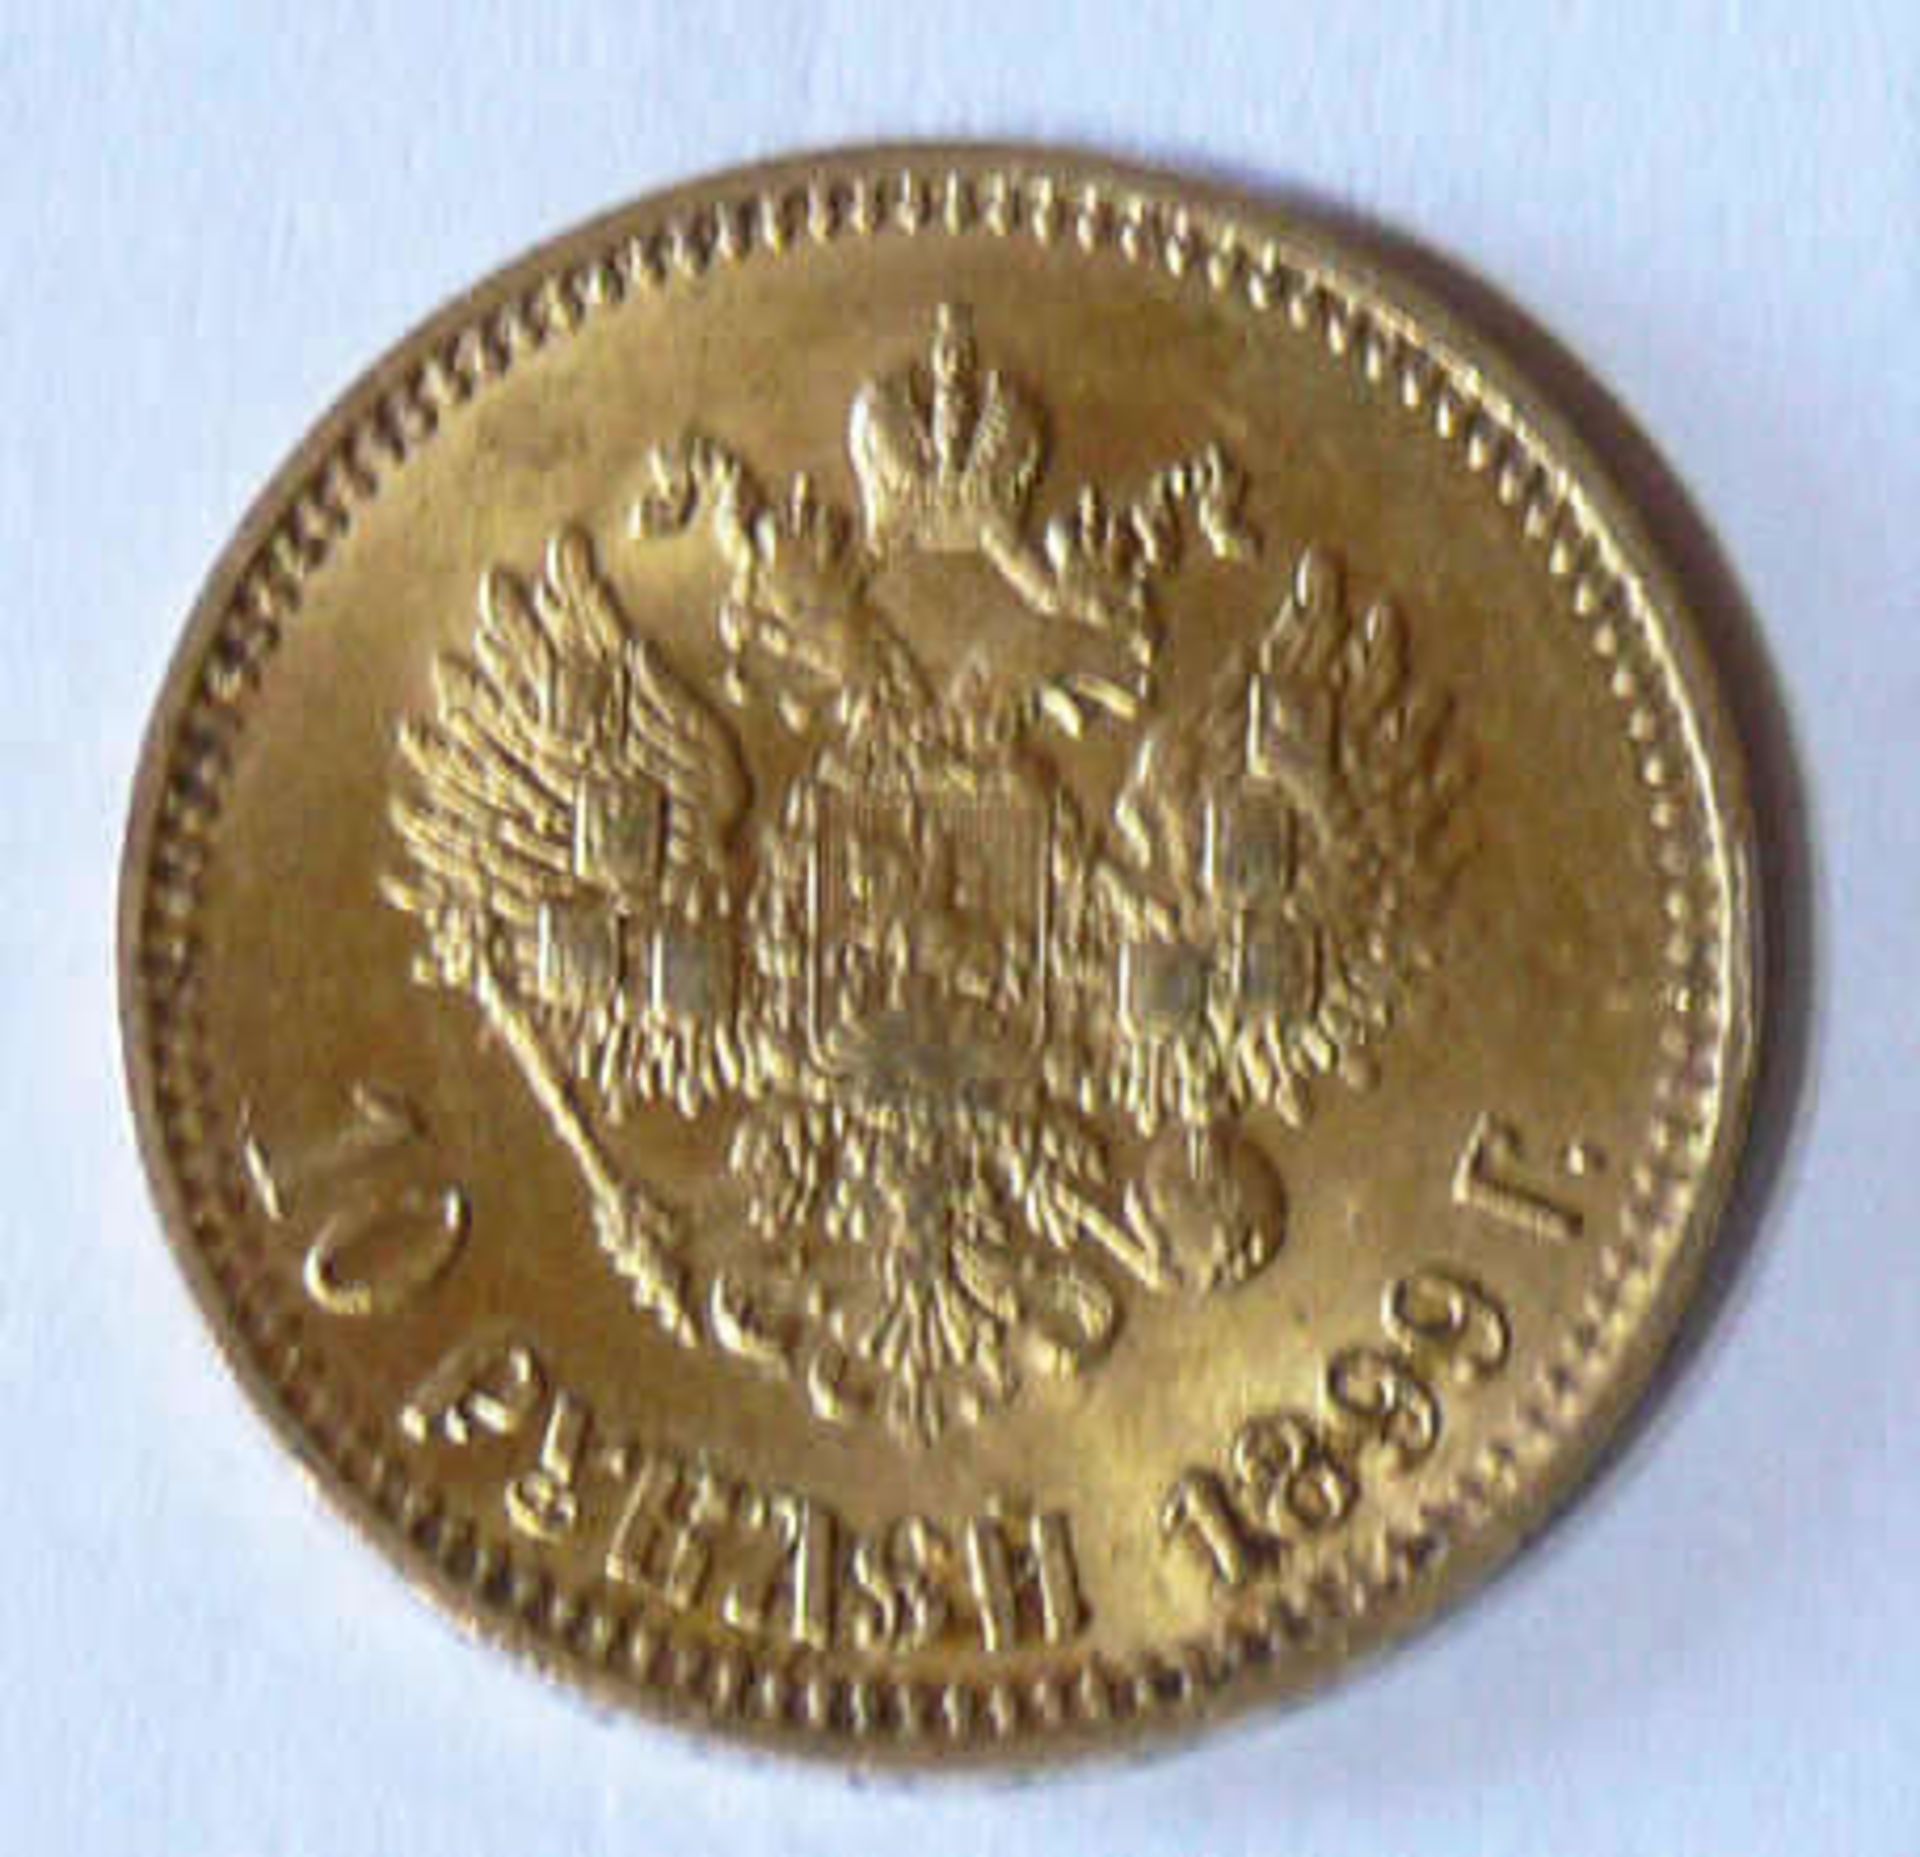 Russland 1899, 10.- Rubel - Goldmünze. Zar Nikolaus II. Gewicht: ca. 8.6 g. Gold 900. Feingewicht: